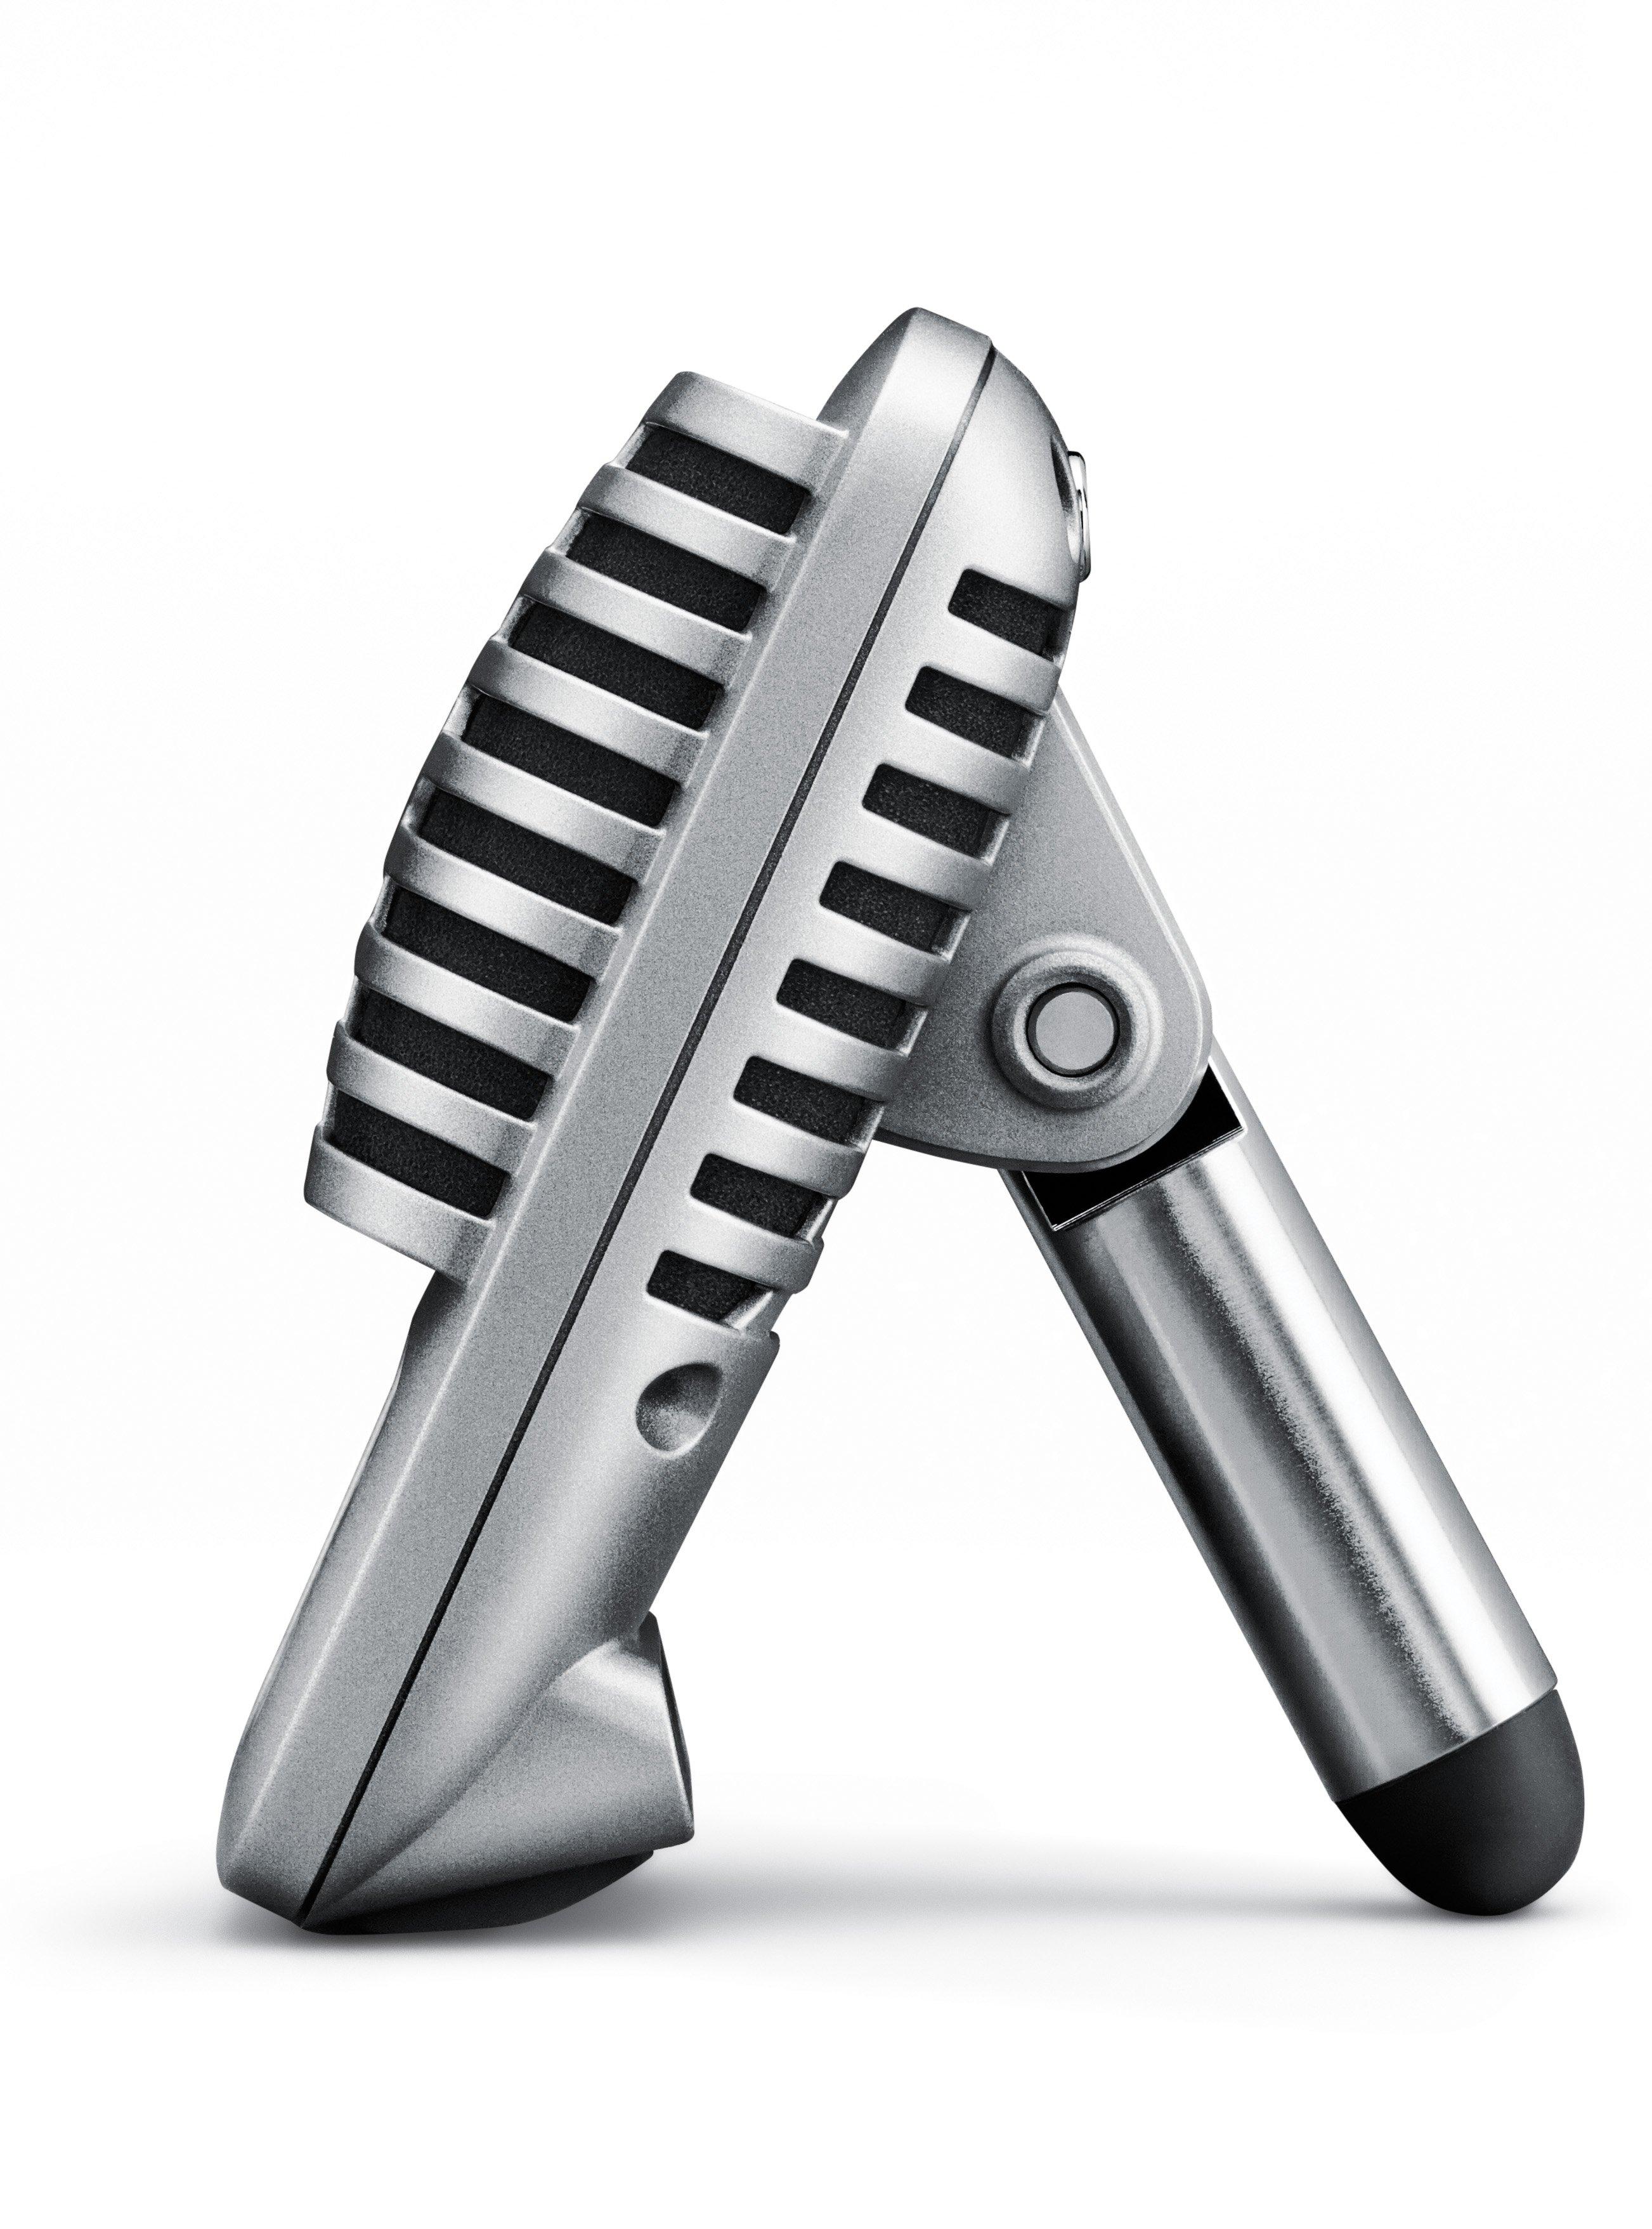 list item 2 of 5 Shure MV51 Professional Home Studio Microphone